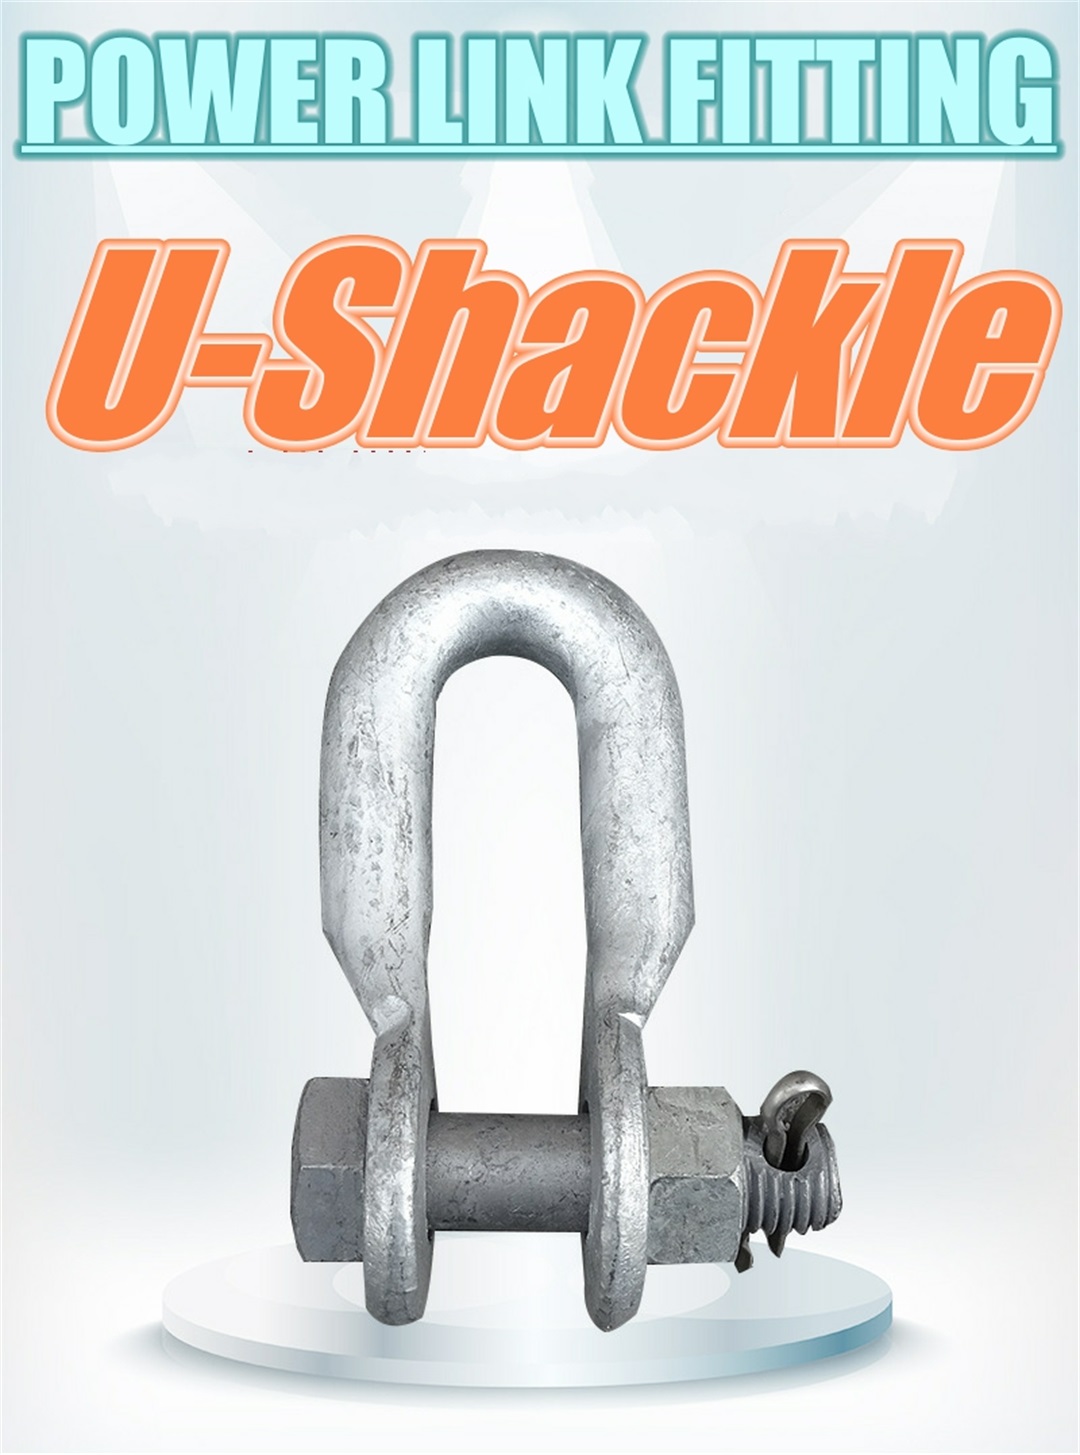 U shackle သည် ပါဝါလင့်ခ်အသုံးအဆောင်များ အပေါ်စီးမှလိုင်းများဖြစ်သည်။